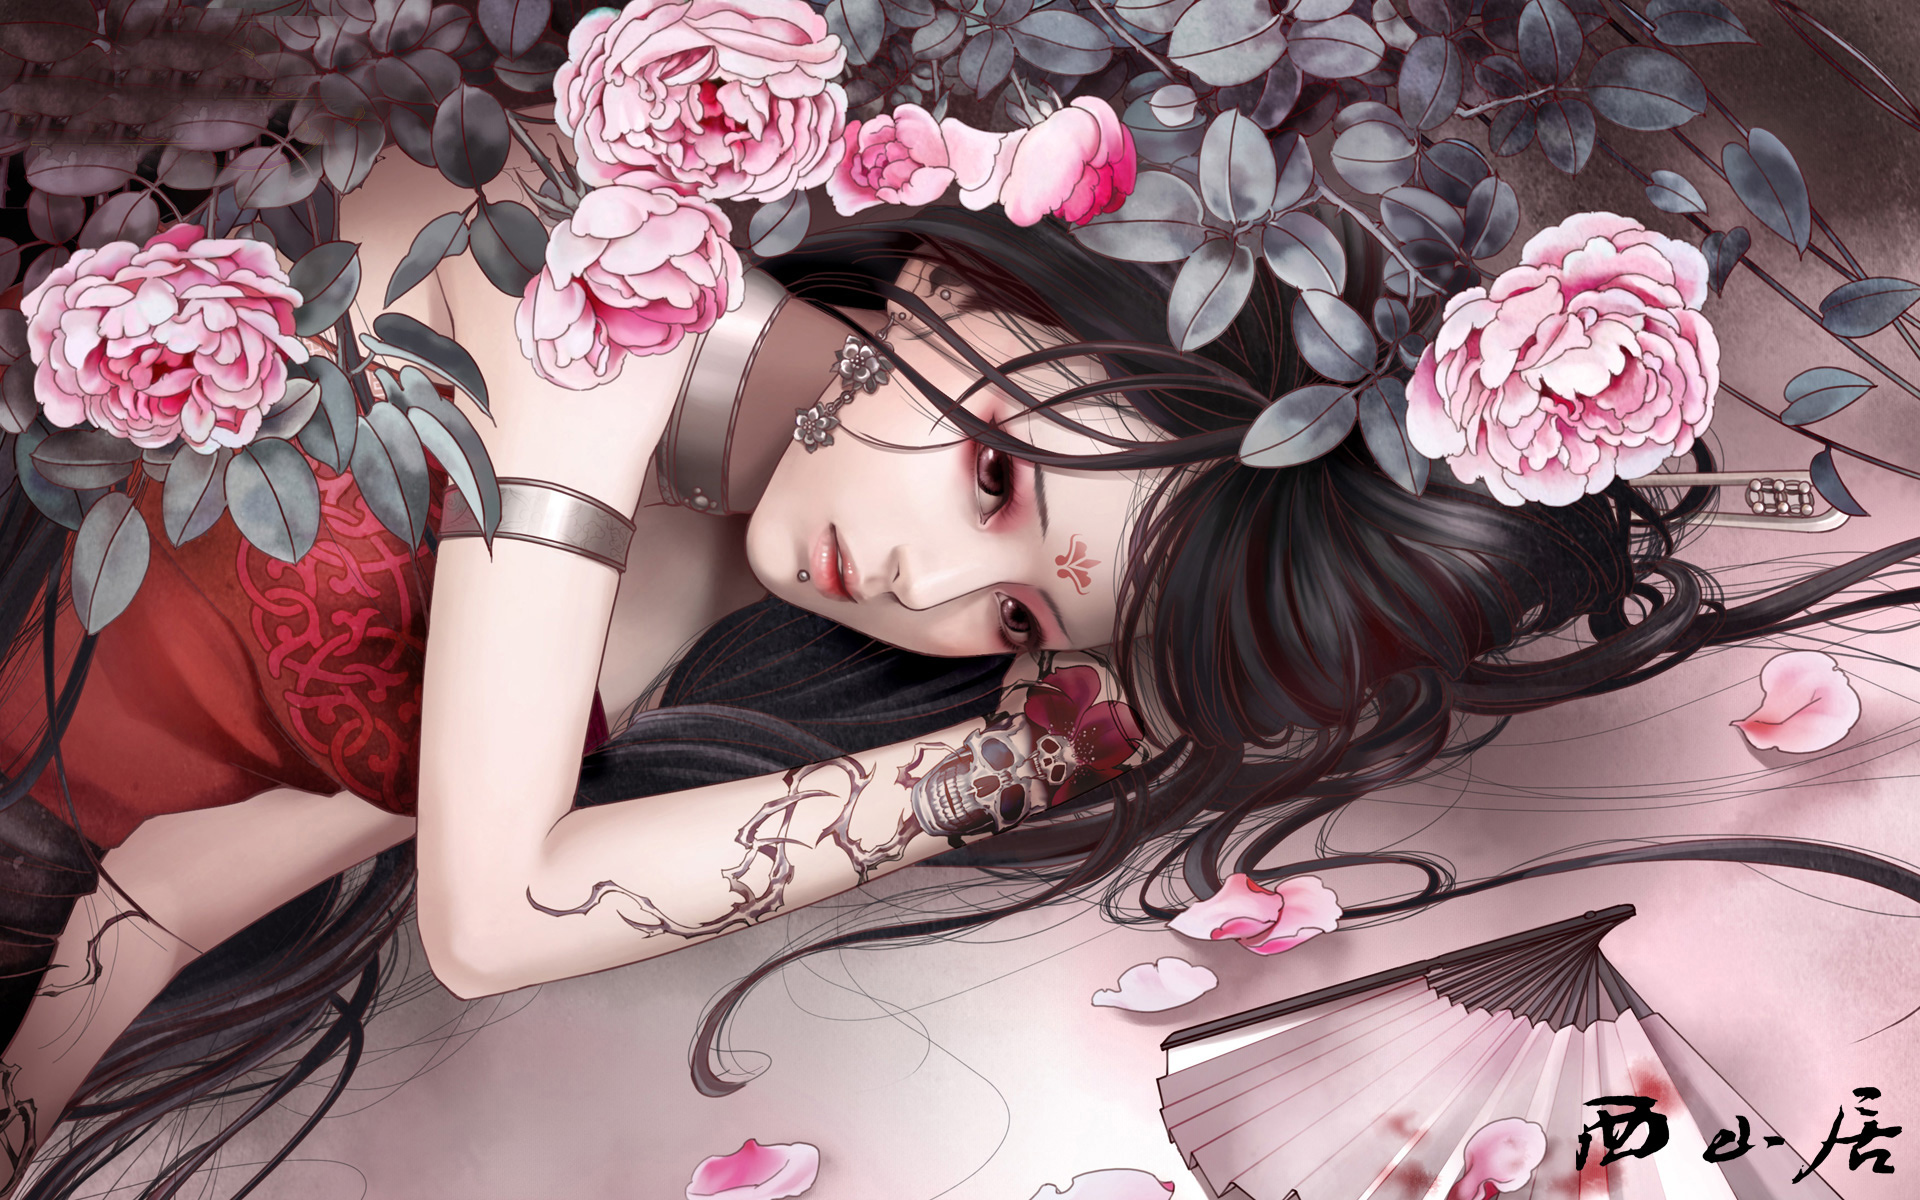 lying down, fan, video game, jx online, asian, fantasy, pink rose, rose, skull, tattoo